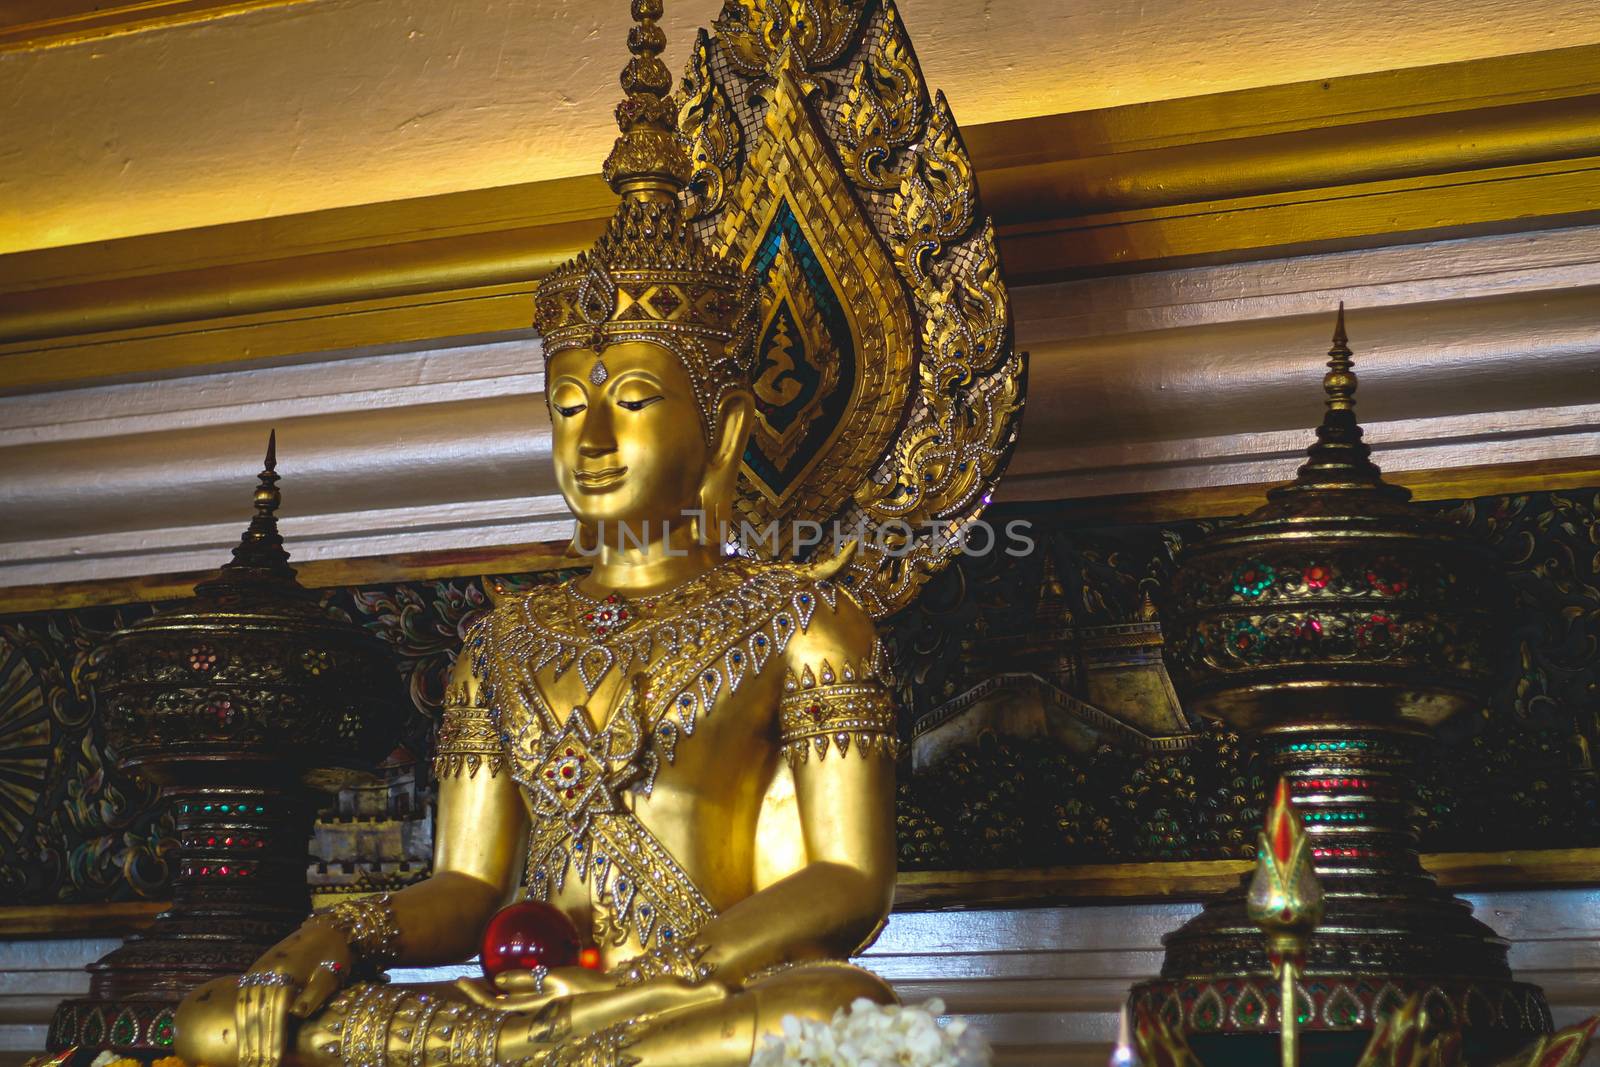 Golden Mahayana Buddhist statue by Sonnet15